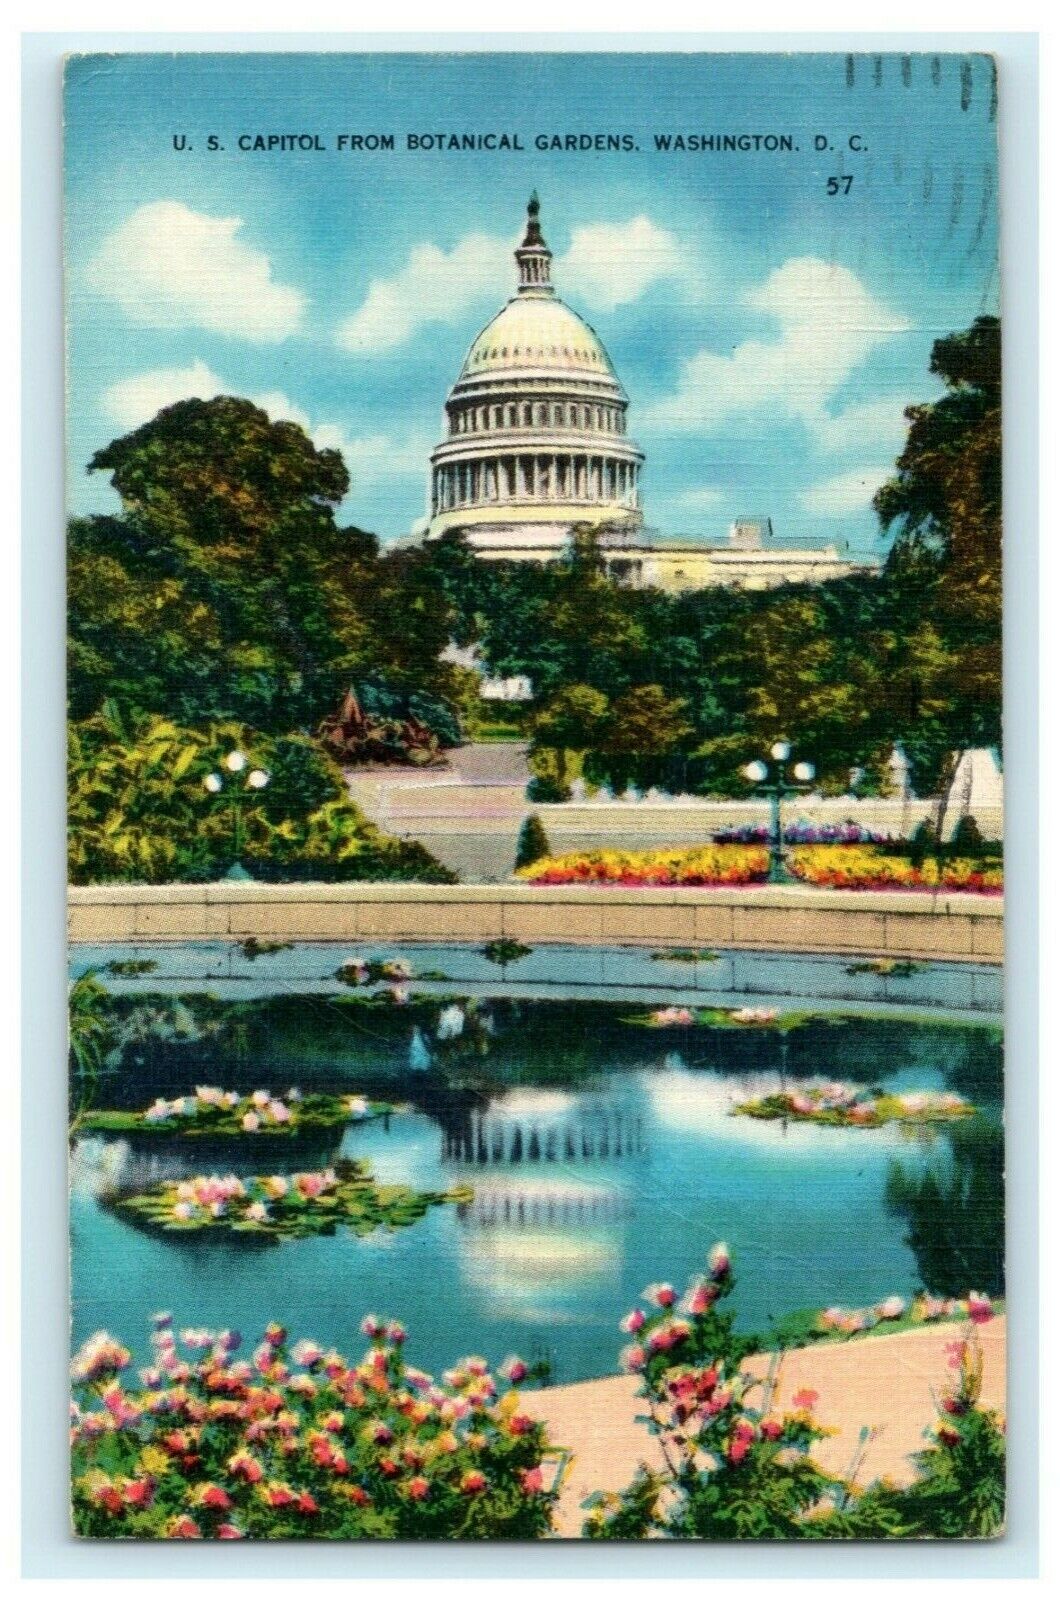 U.S. Capitol From Botanical Gardens Washington D.C. 1956 Vintage Postcard